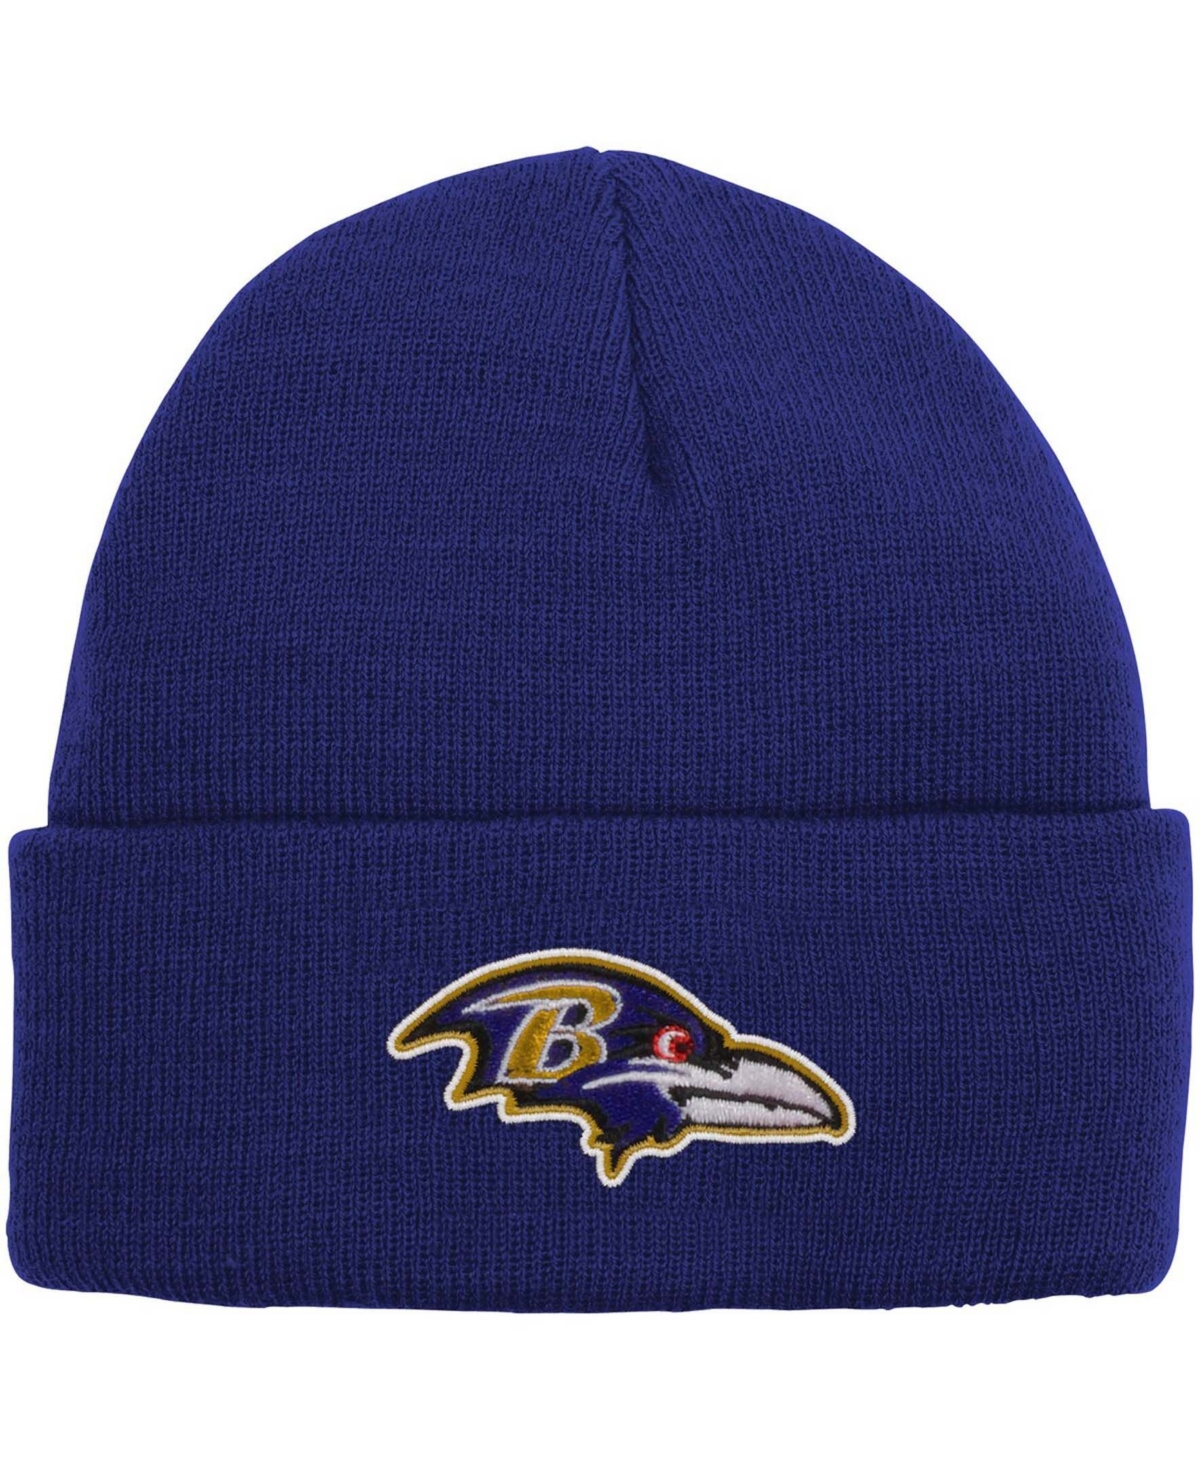 Shop Outerstuff Big Boys And Girls Purple Baltimore Ravens Basic Cuffed Knit Hat